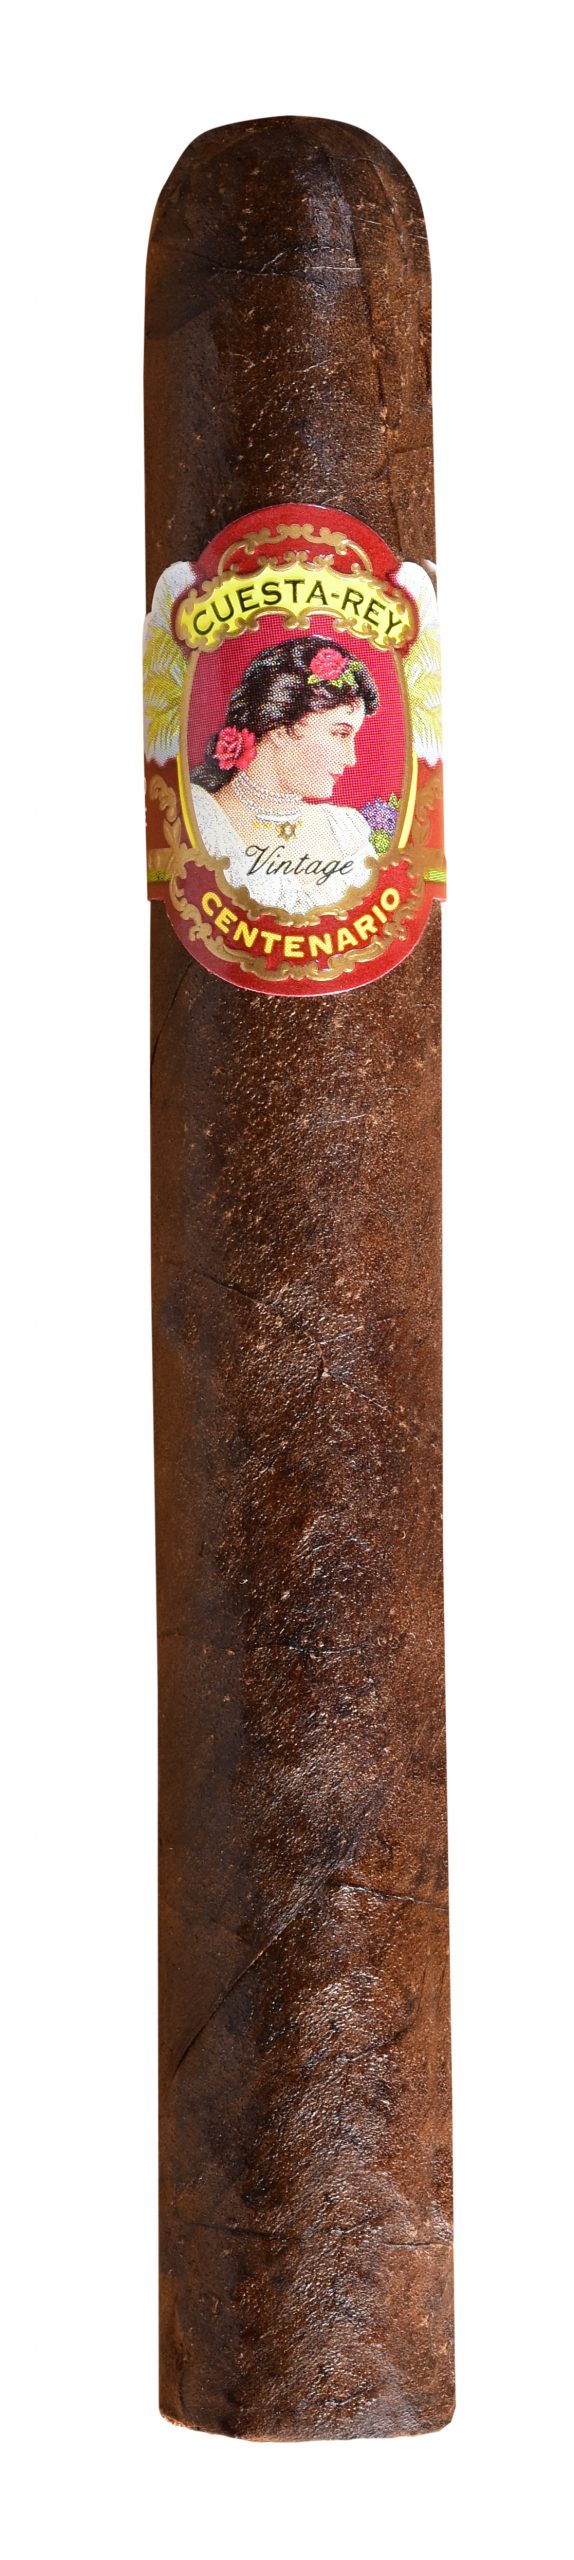 cuesta rey maduro number 60 single cigar